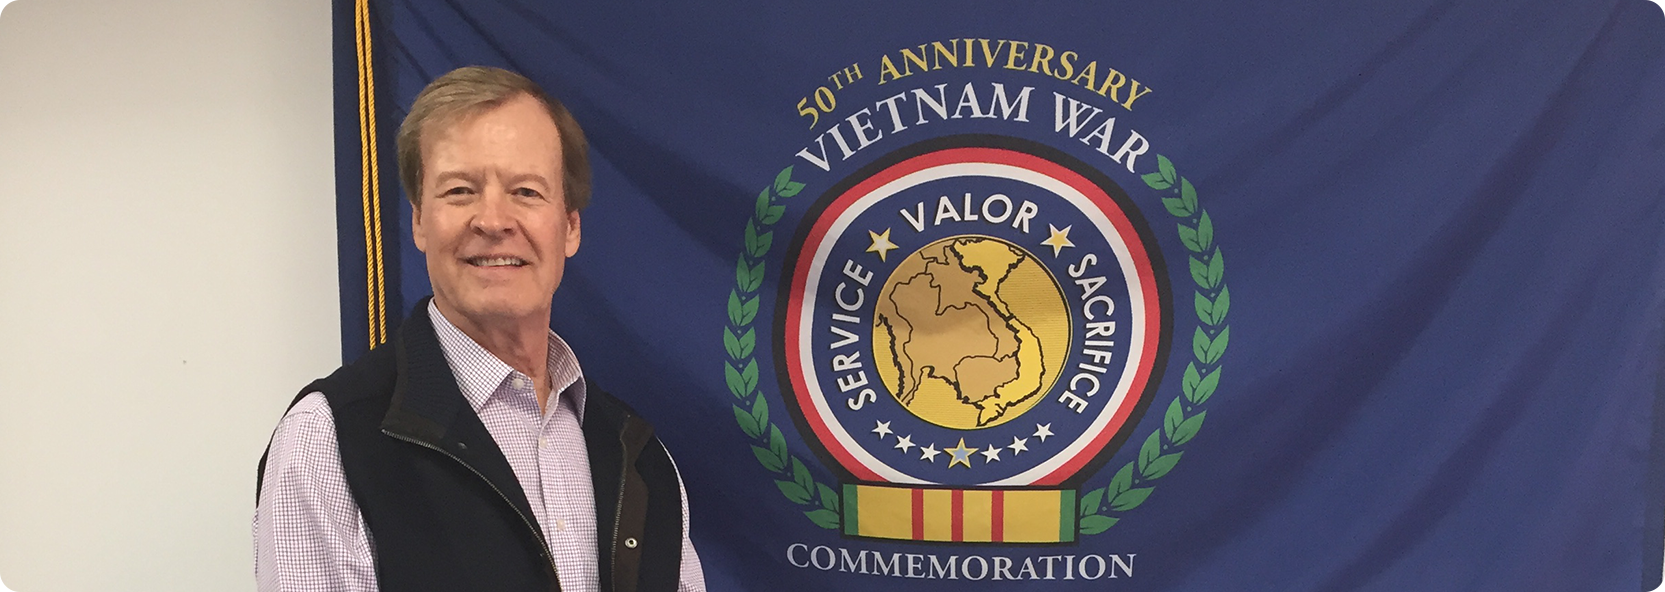 50th Anniversary Vietnam War Commemoration